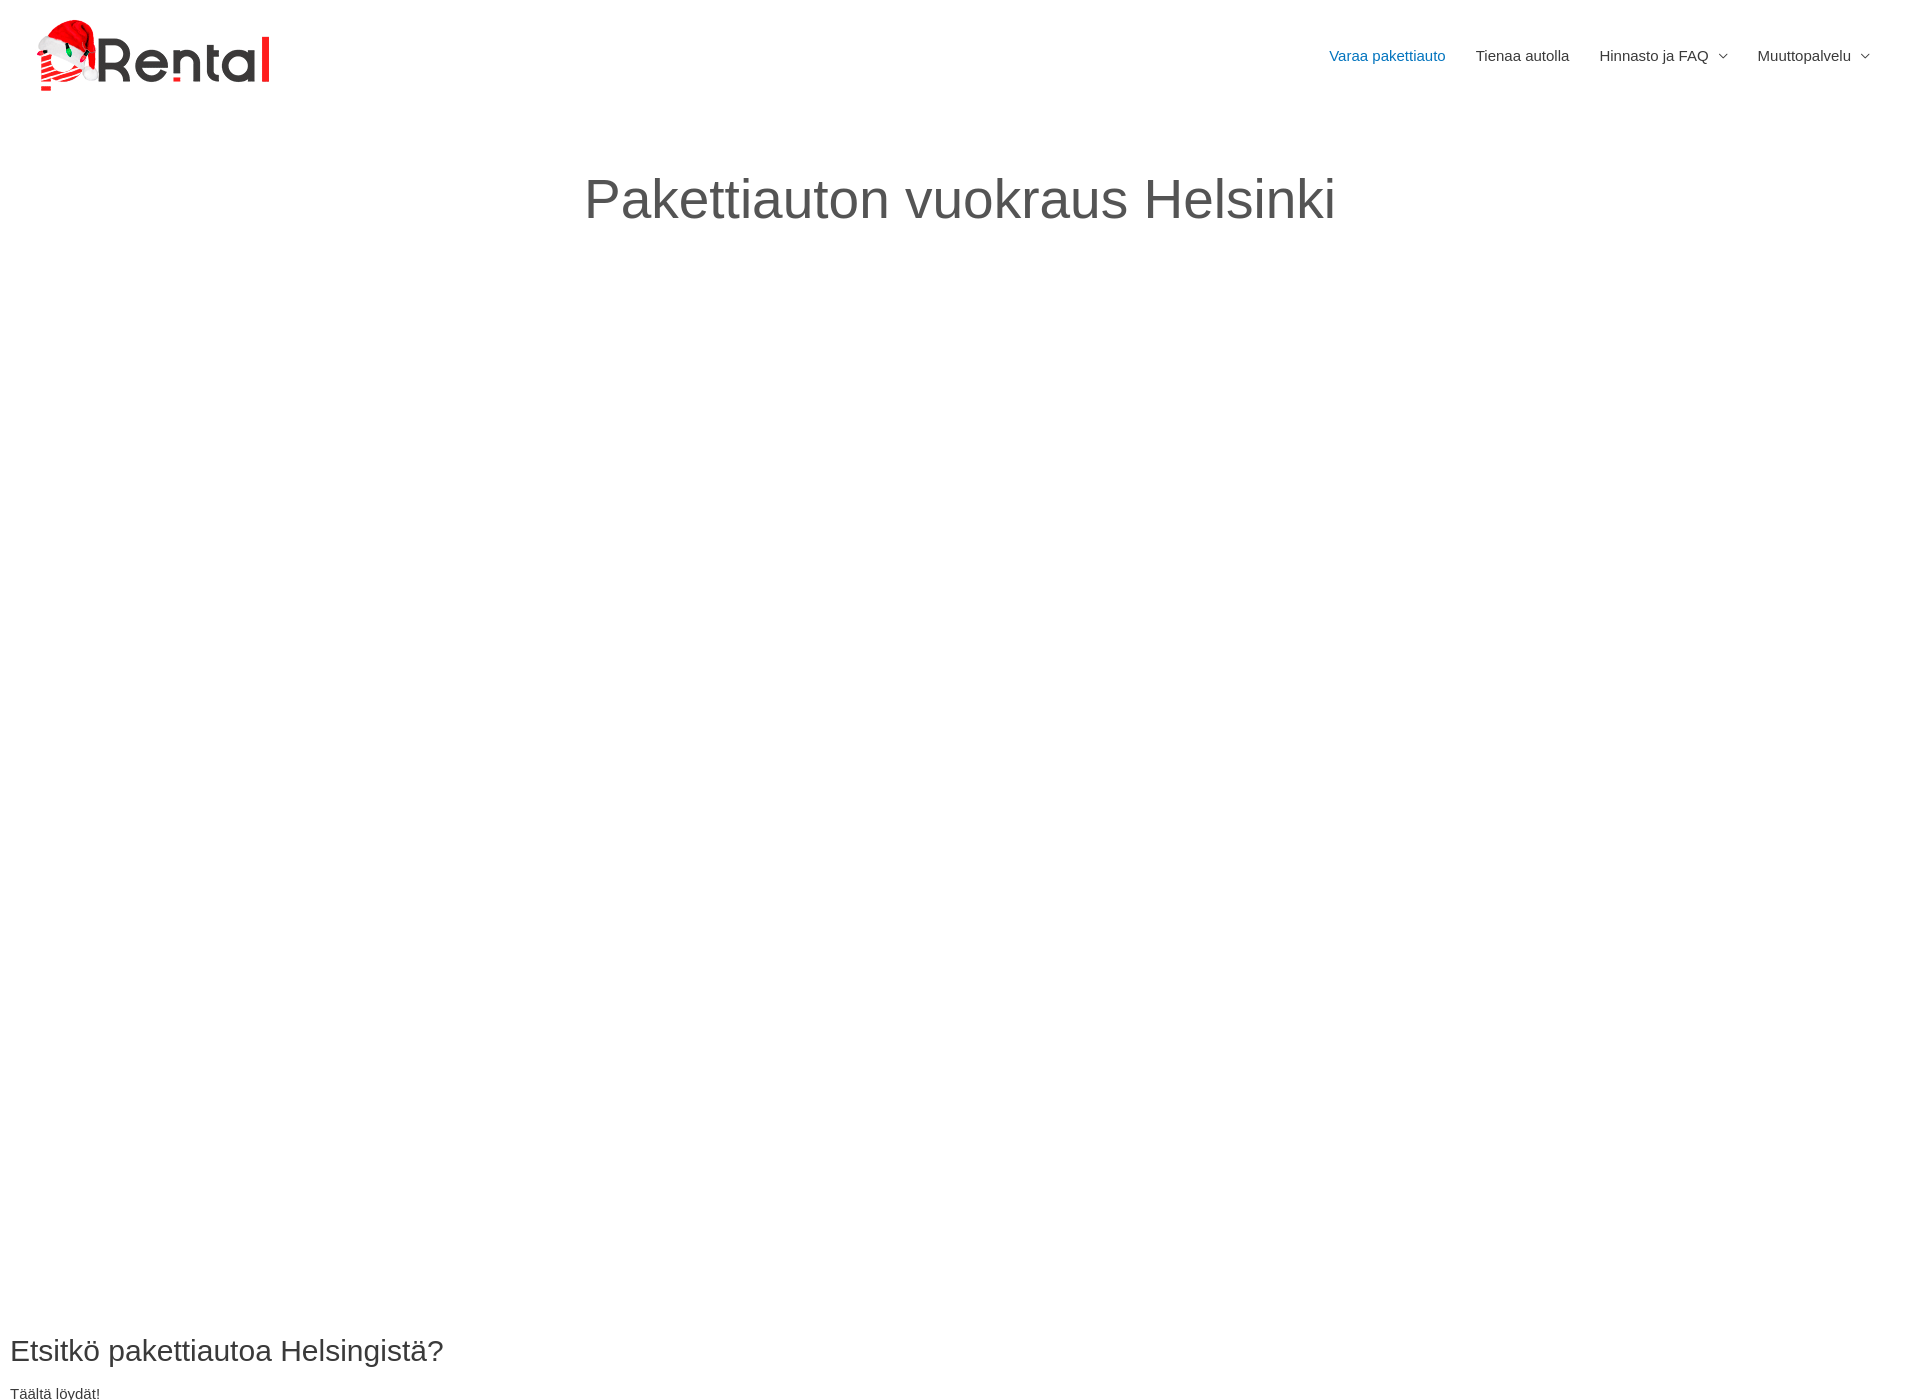 Skärmdump för pakettiautonvuokraushelsinki.fi